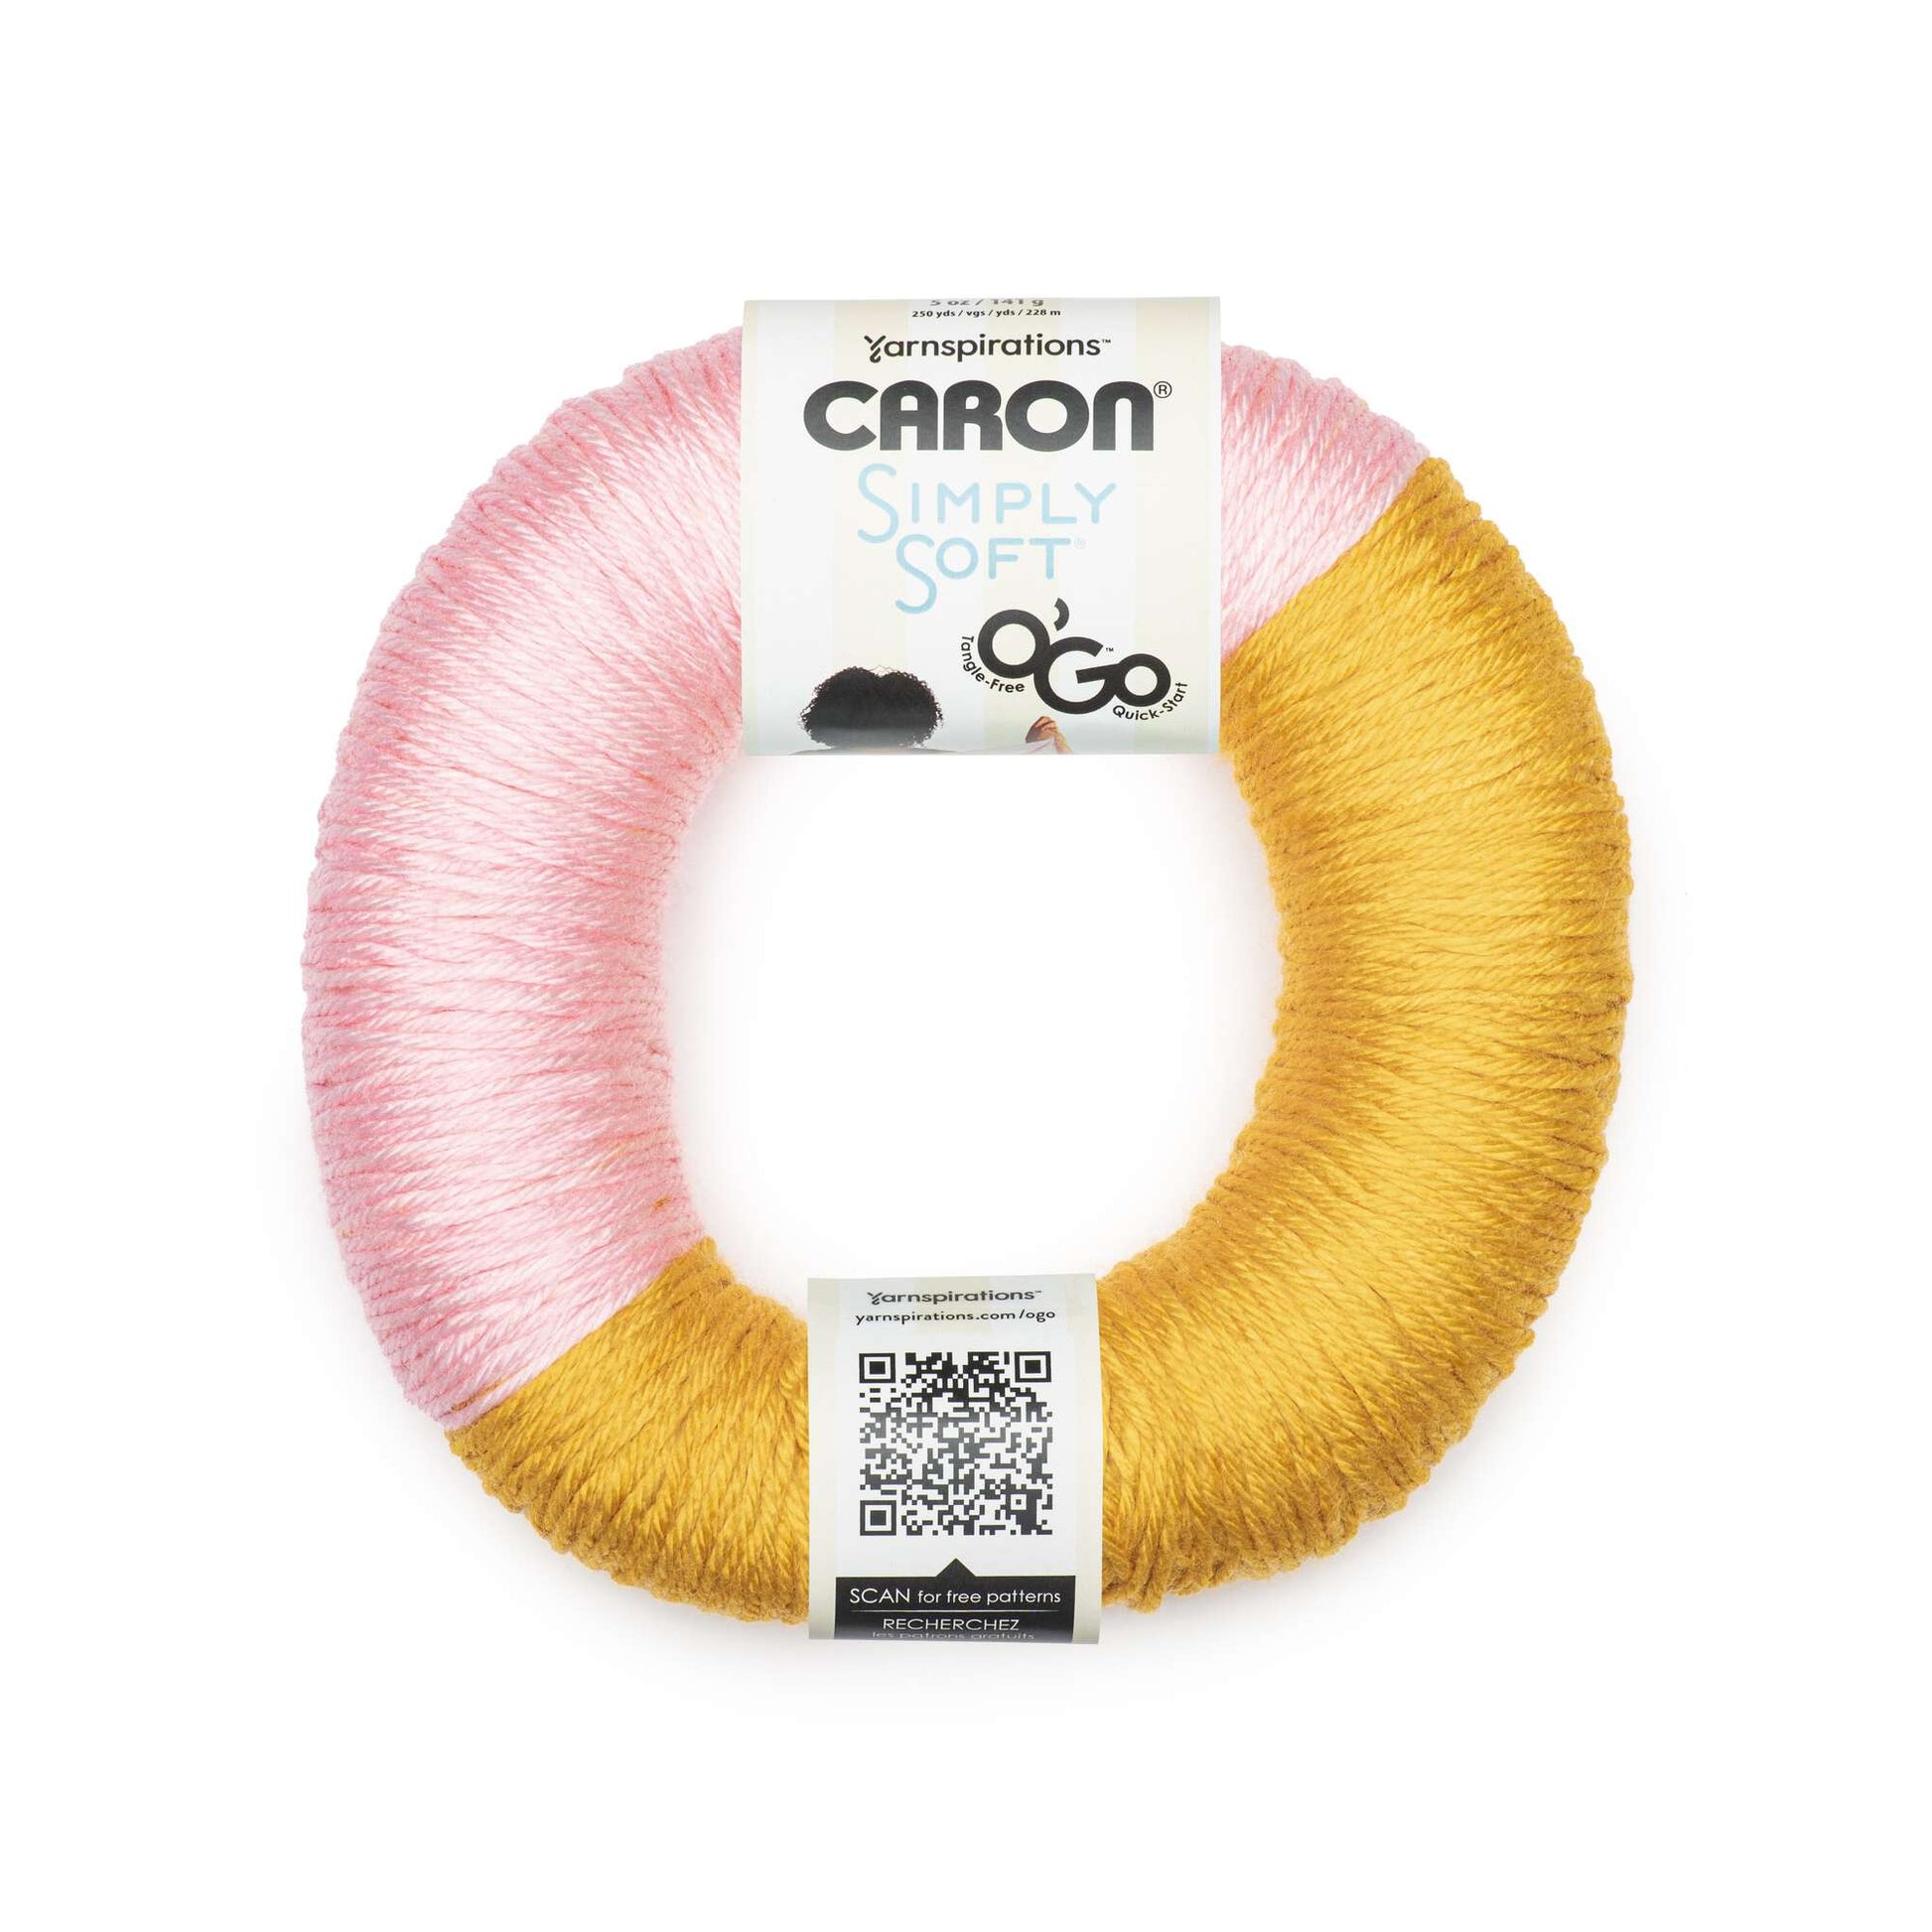 Caron Simply Soft Acrylic White Yarn 5.5 oz, size 4 yarn, approx 280 yds.